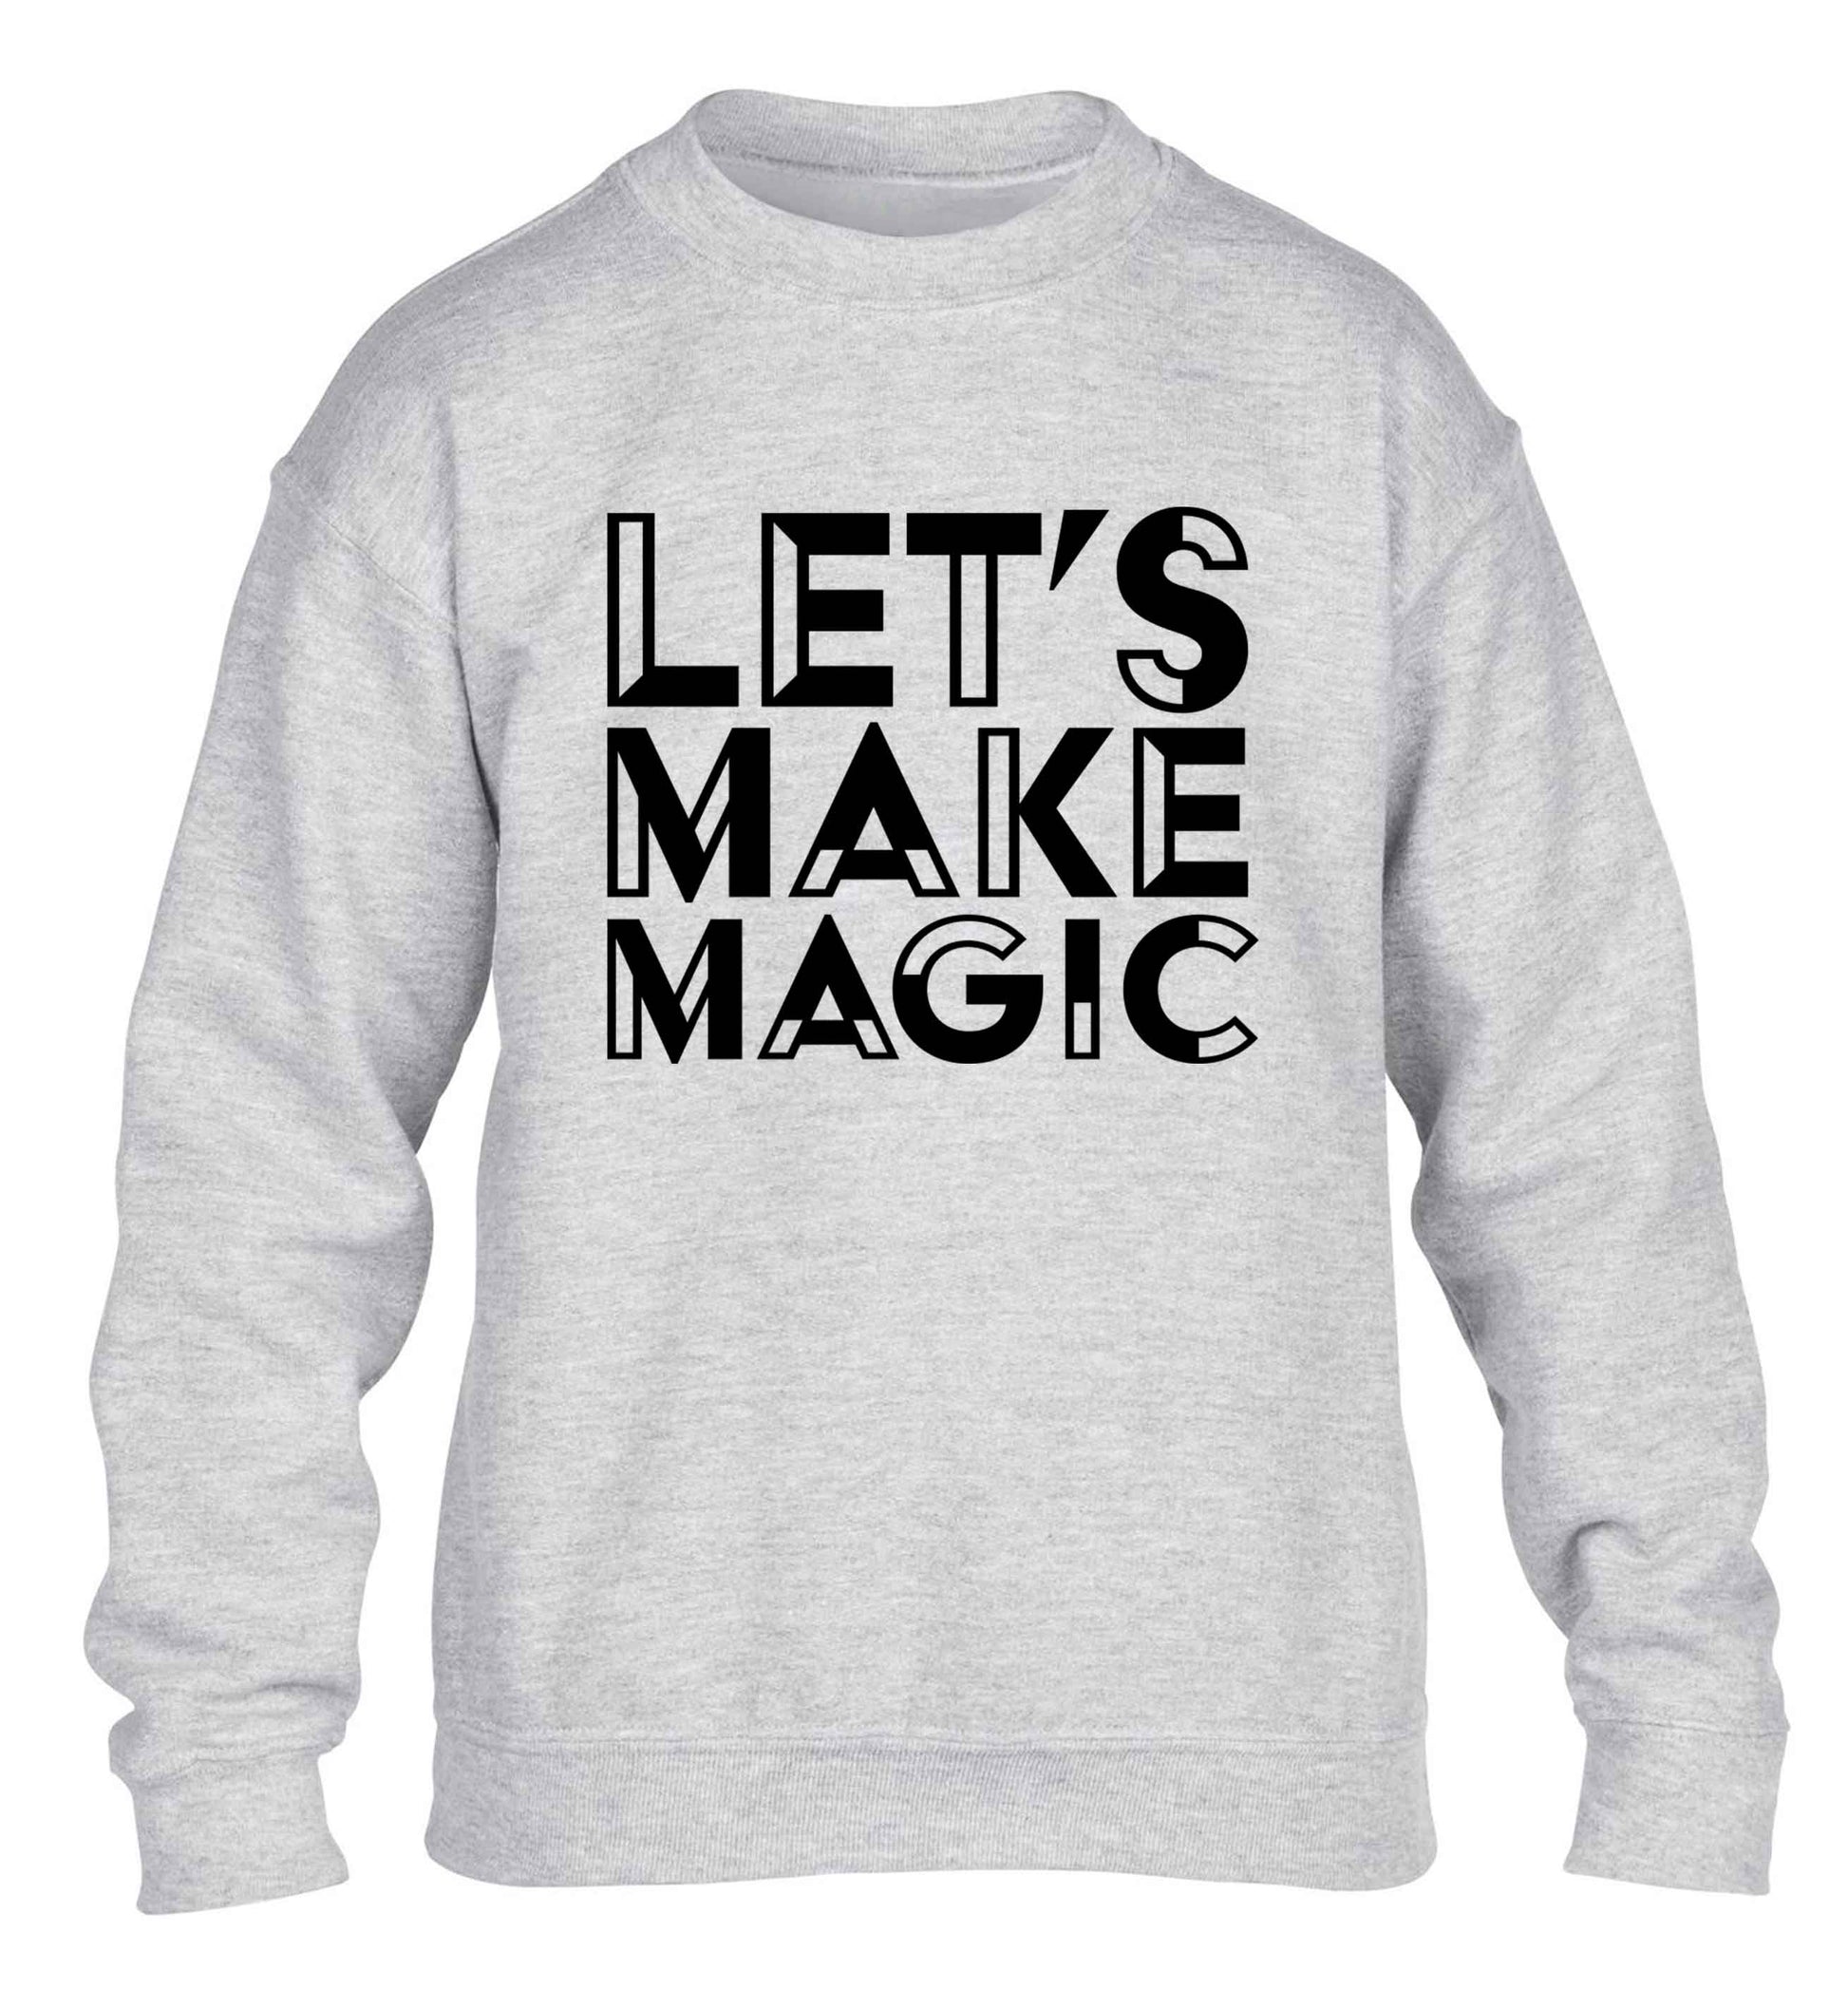 Let's make magic children's grey sweater 12-13 Years